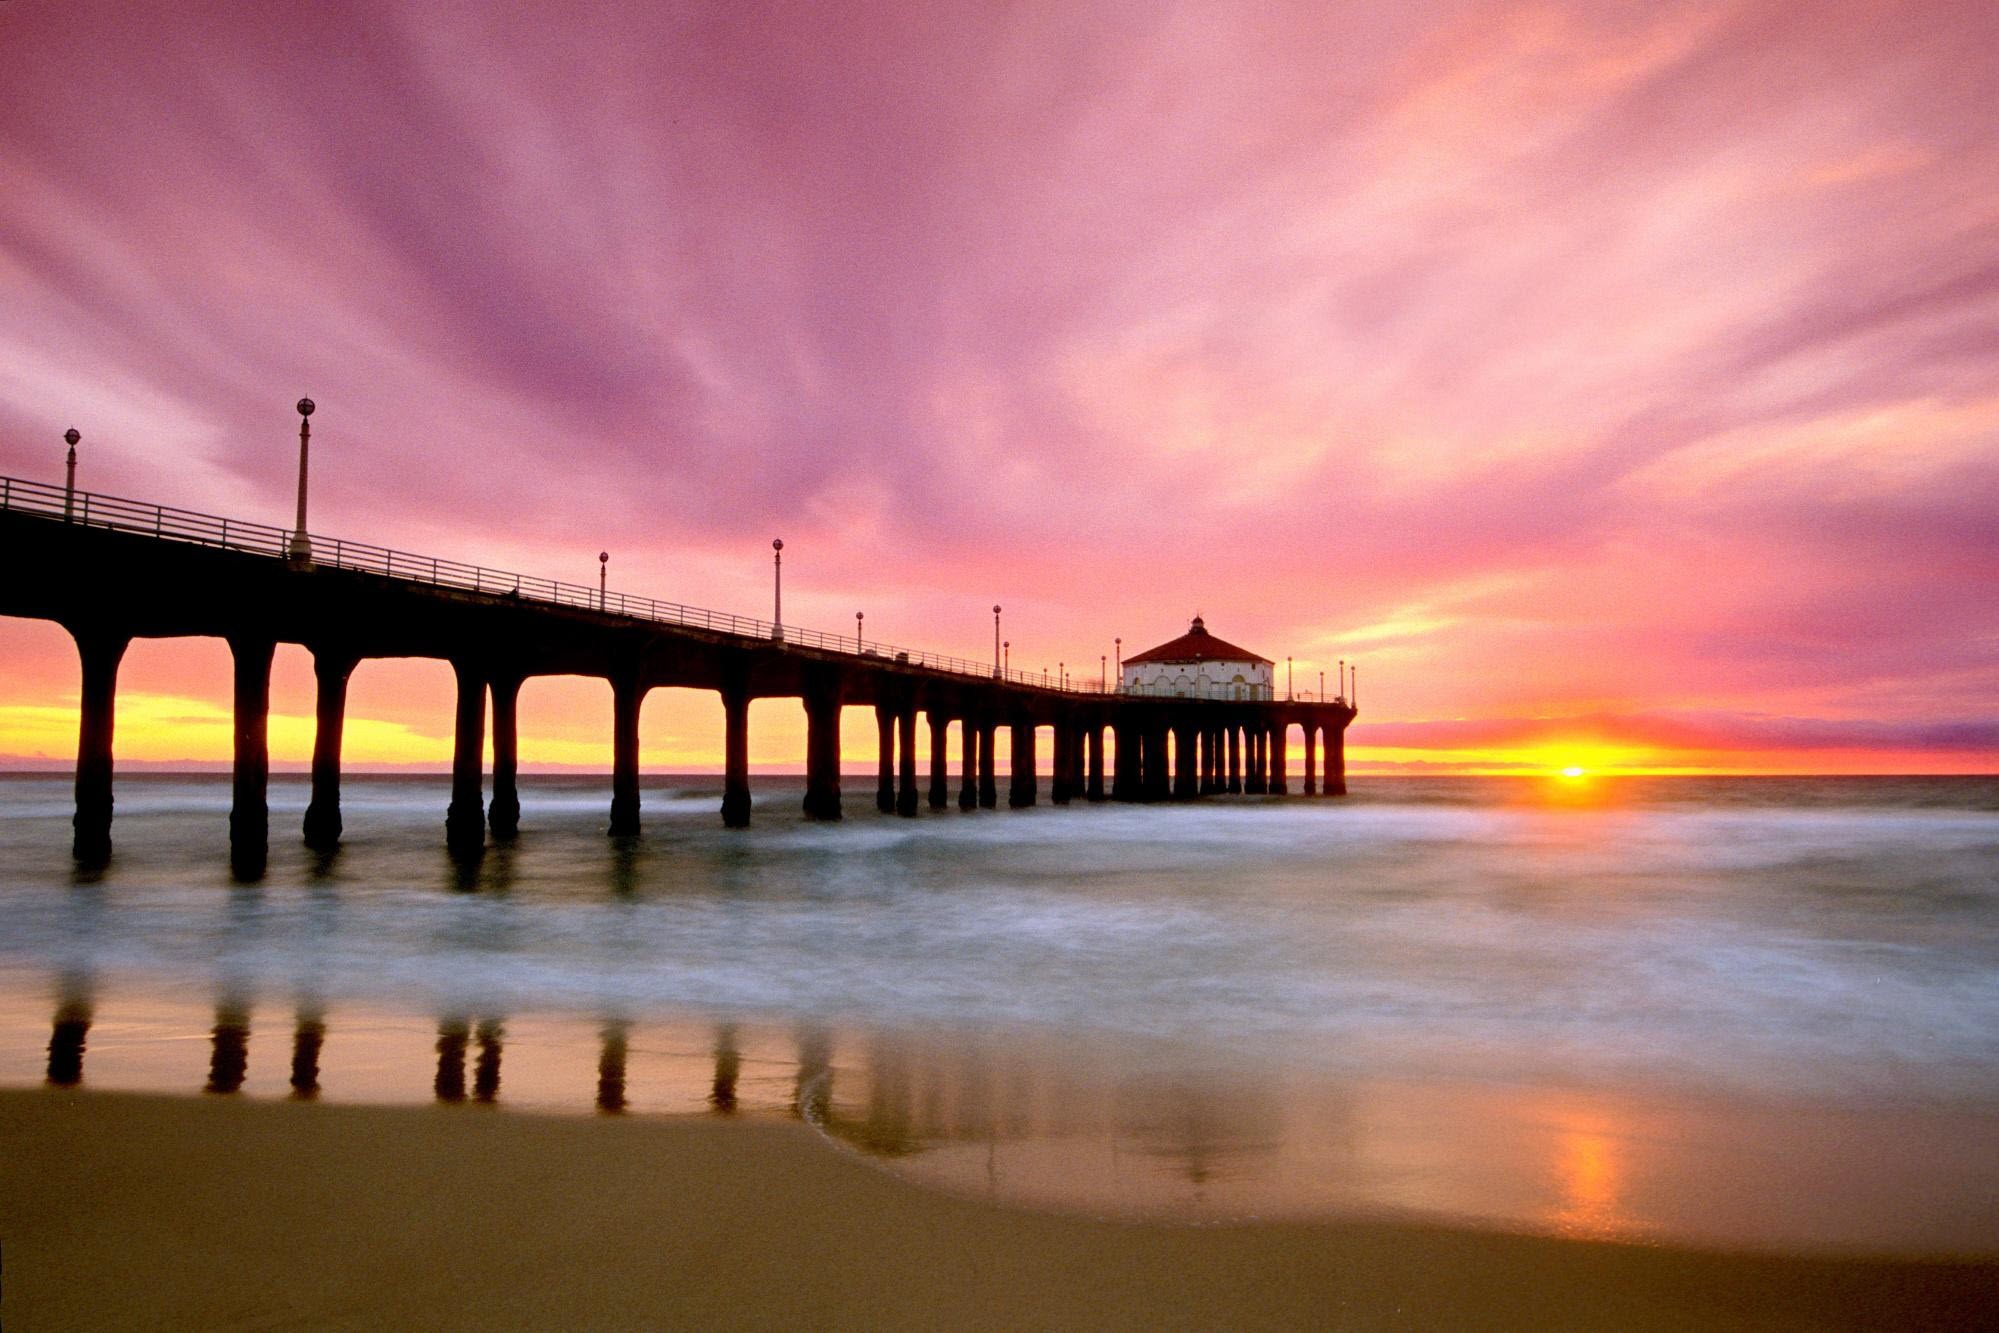 General 1999x1333 pier sea landscape purple sky beach pink pink clouds sky sunlight